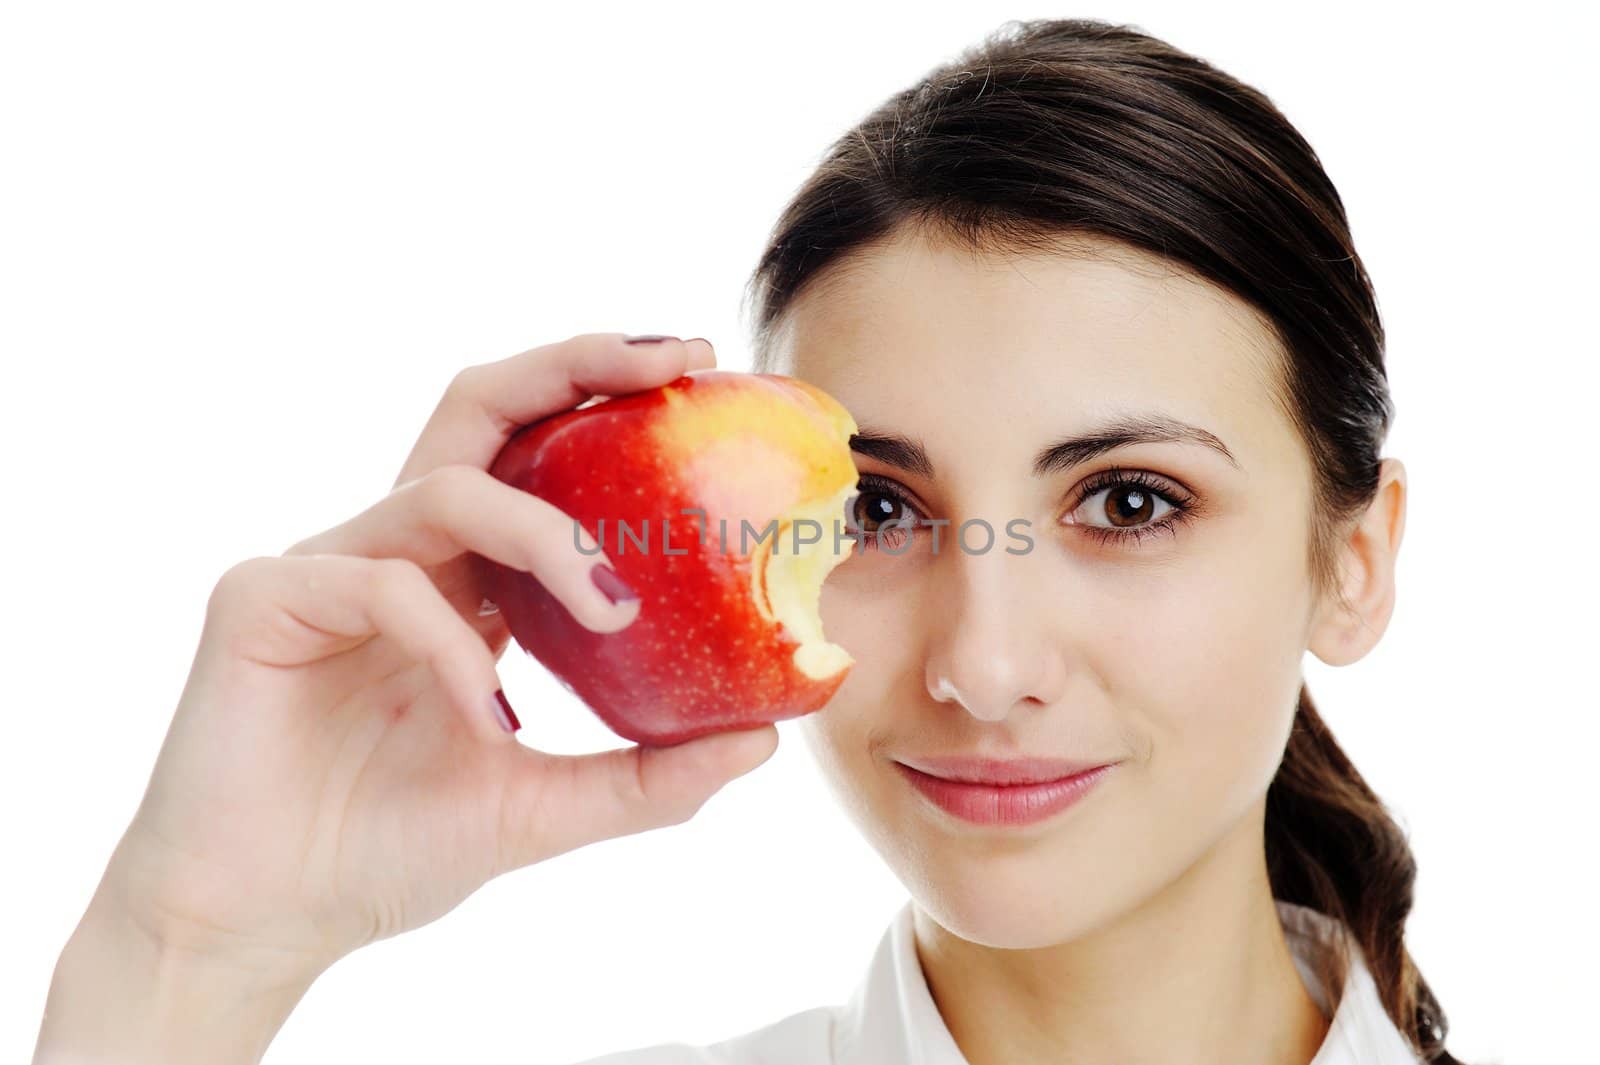 An image of beautiful woman eats an apple